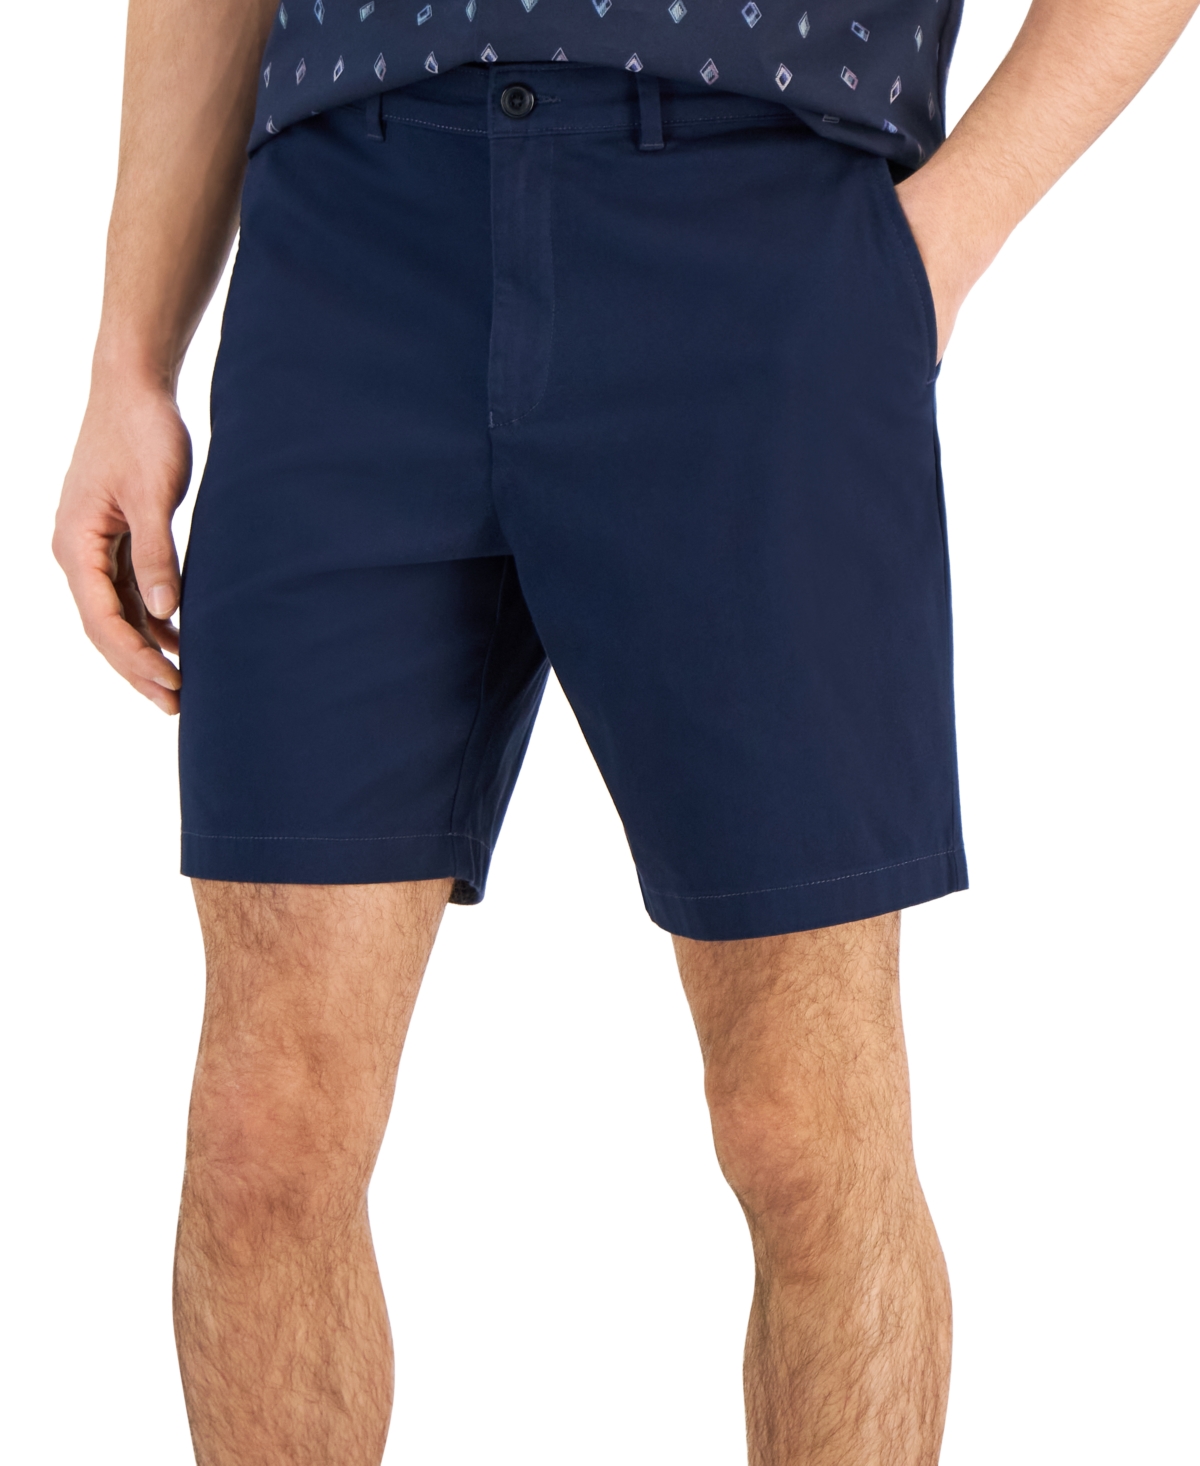 Alfani Men's Shorts, Created for Macy's